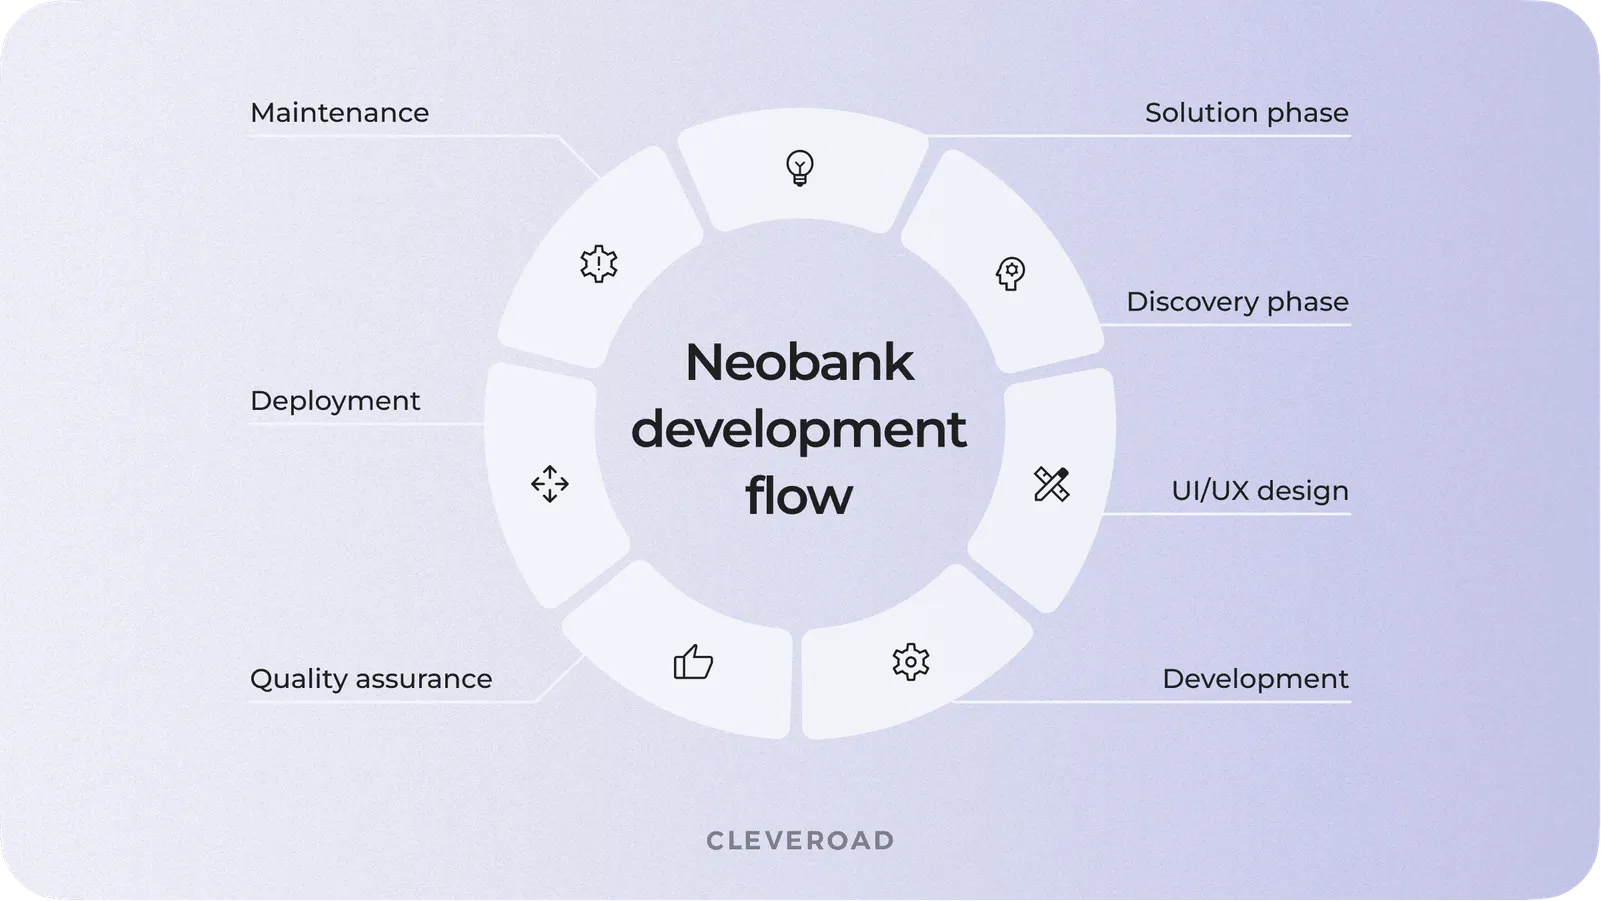 Neobank development